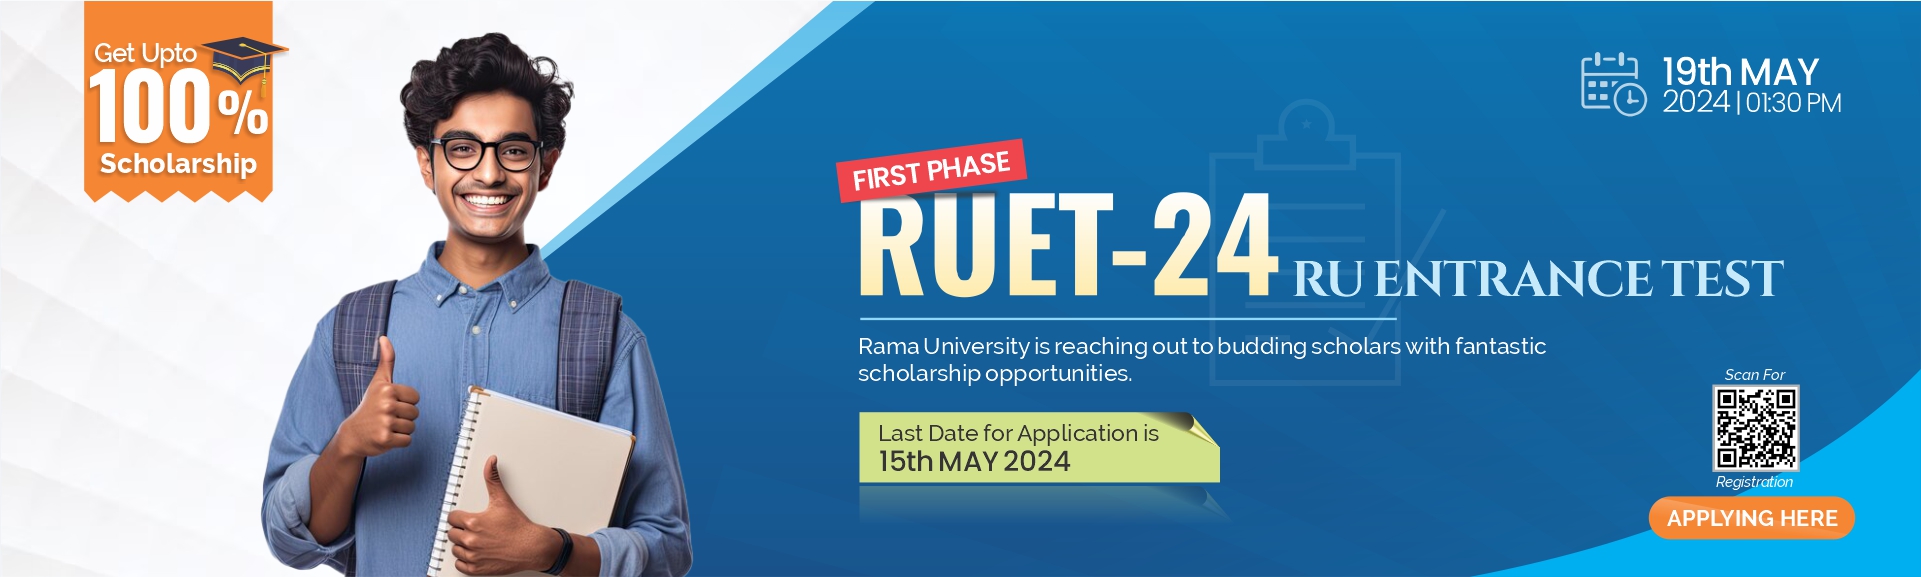 Rama University Entrance Test (RUET)